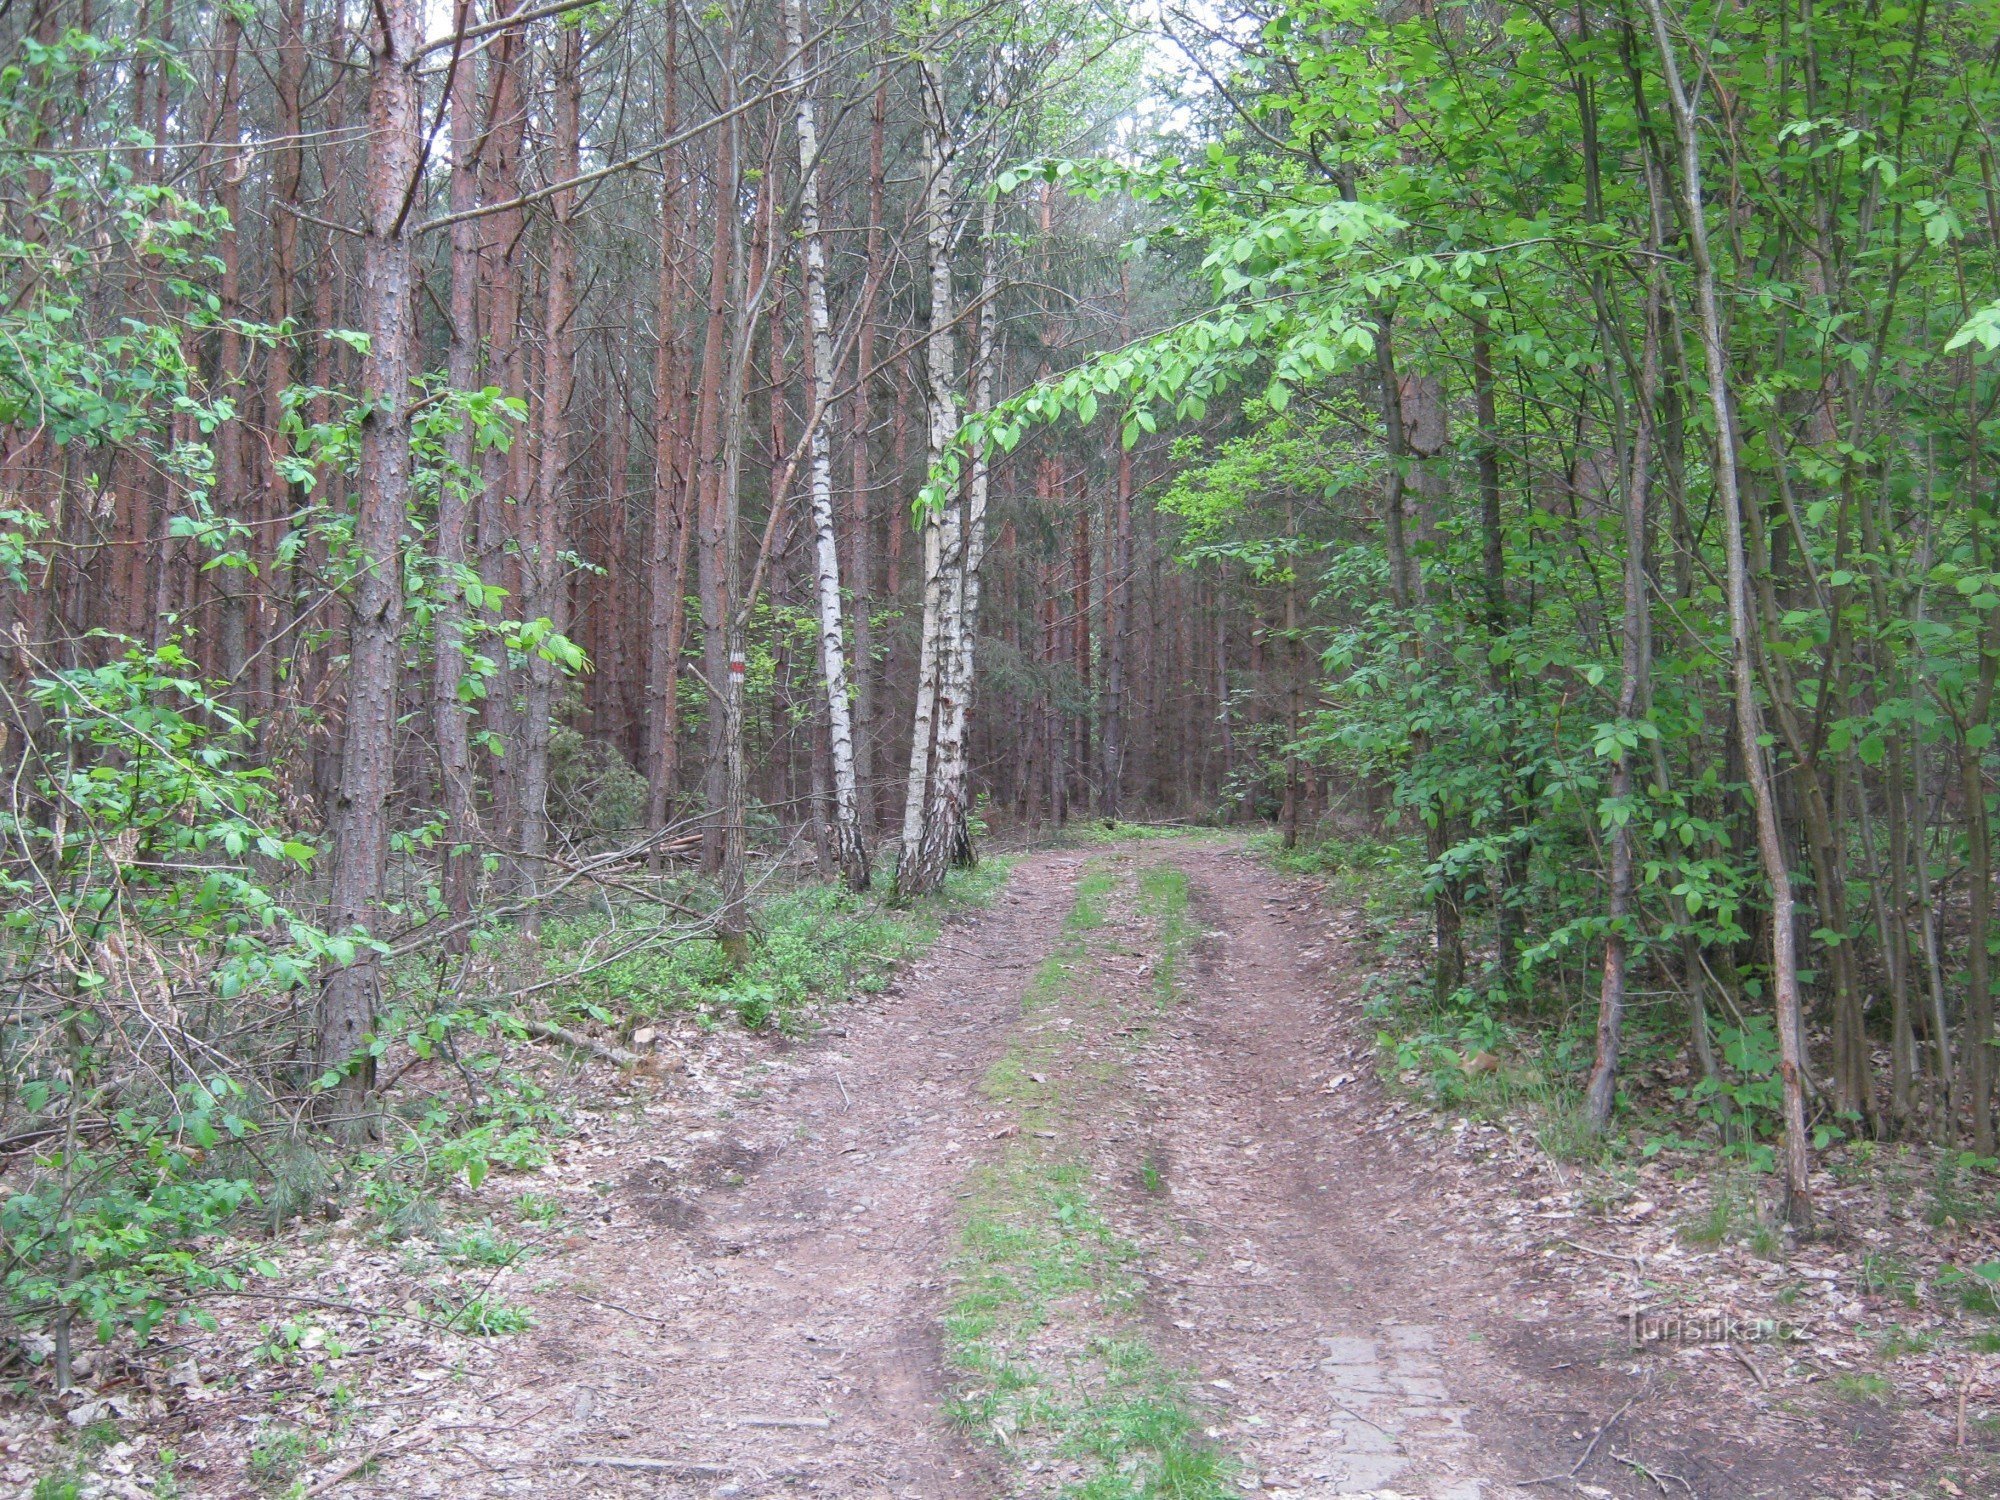 Estrada Florestal